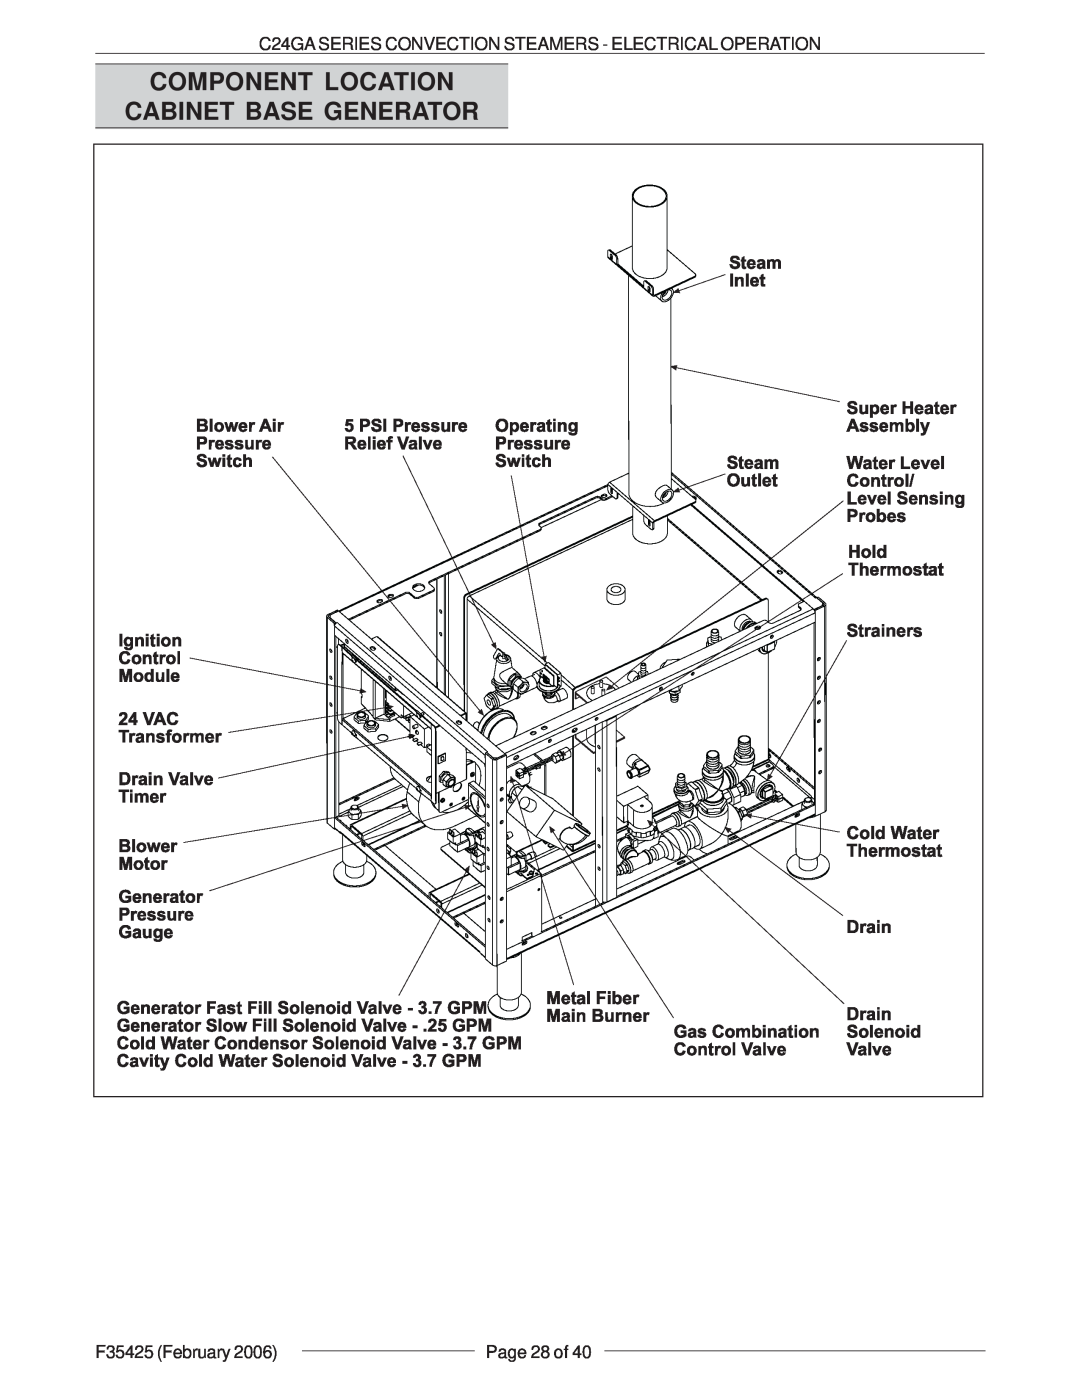 Vulcan-Hart C24GA6, C24GA10, ML-136021, ML-136022 Component Location Cabinet Base Generator, F35425 February, Page 28 of 